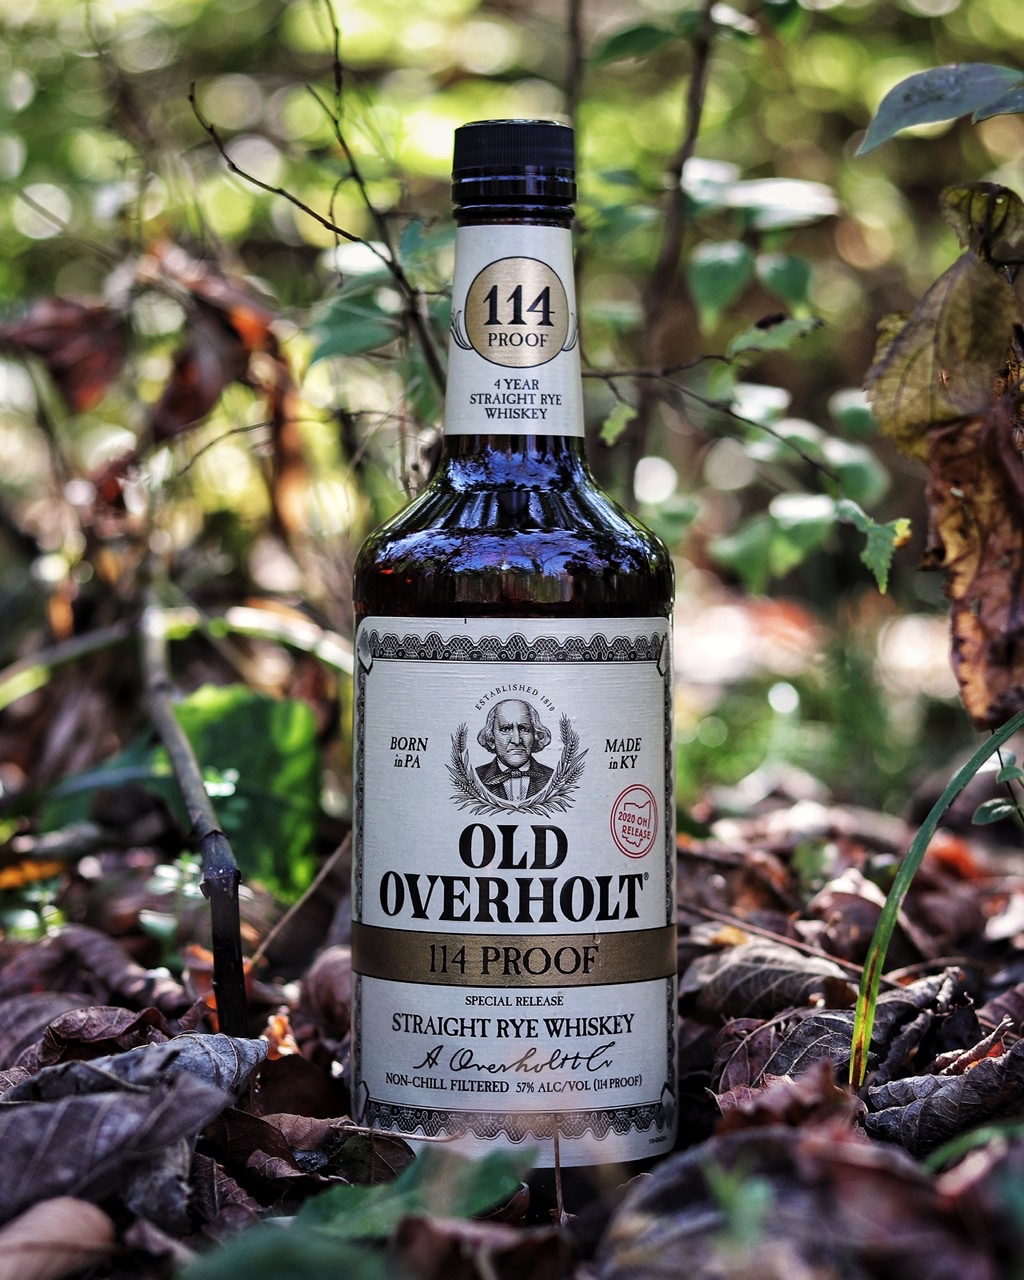 96: Old Overholt Rye Whiskey